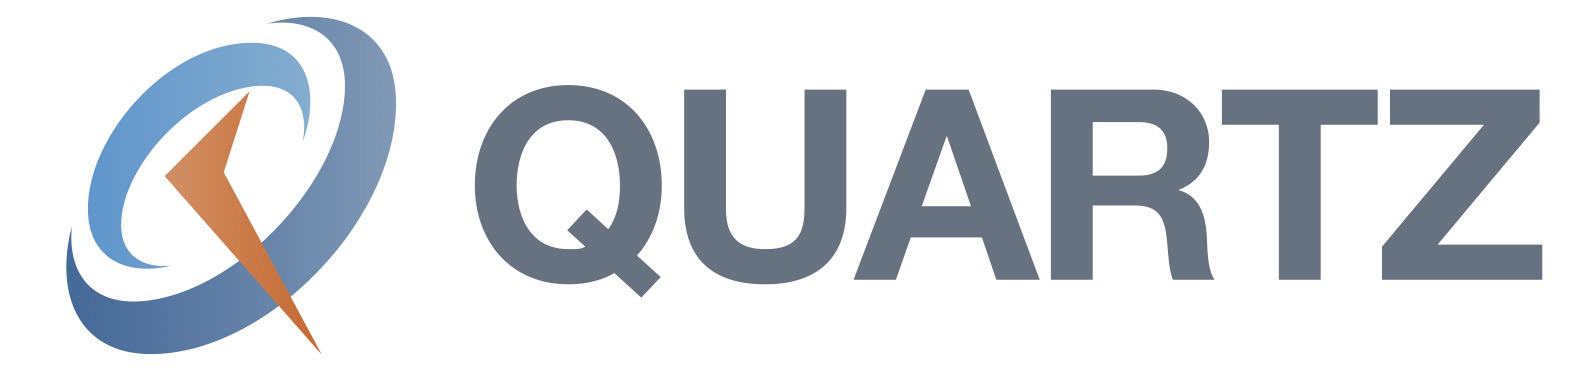 Controlleradvice. Логотип Quartz. Кварц с надписью. Java Quartz. Нобл кварц логотип.